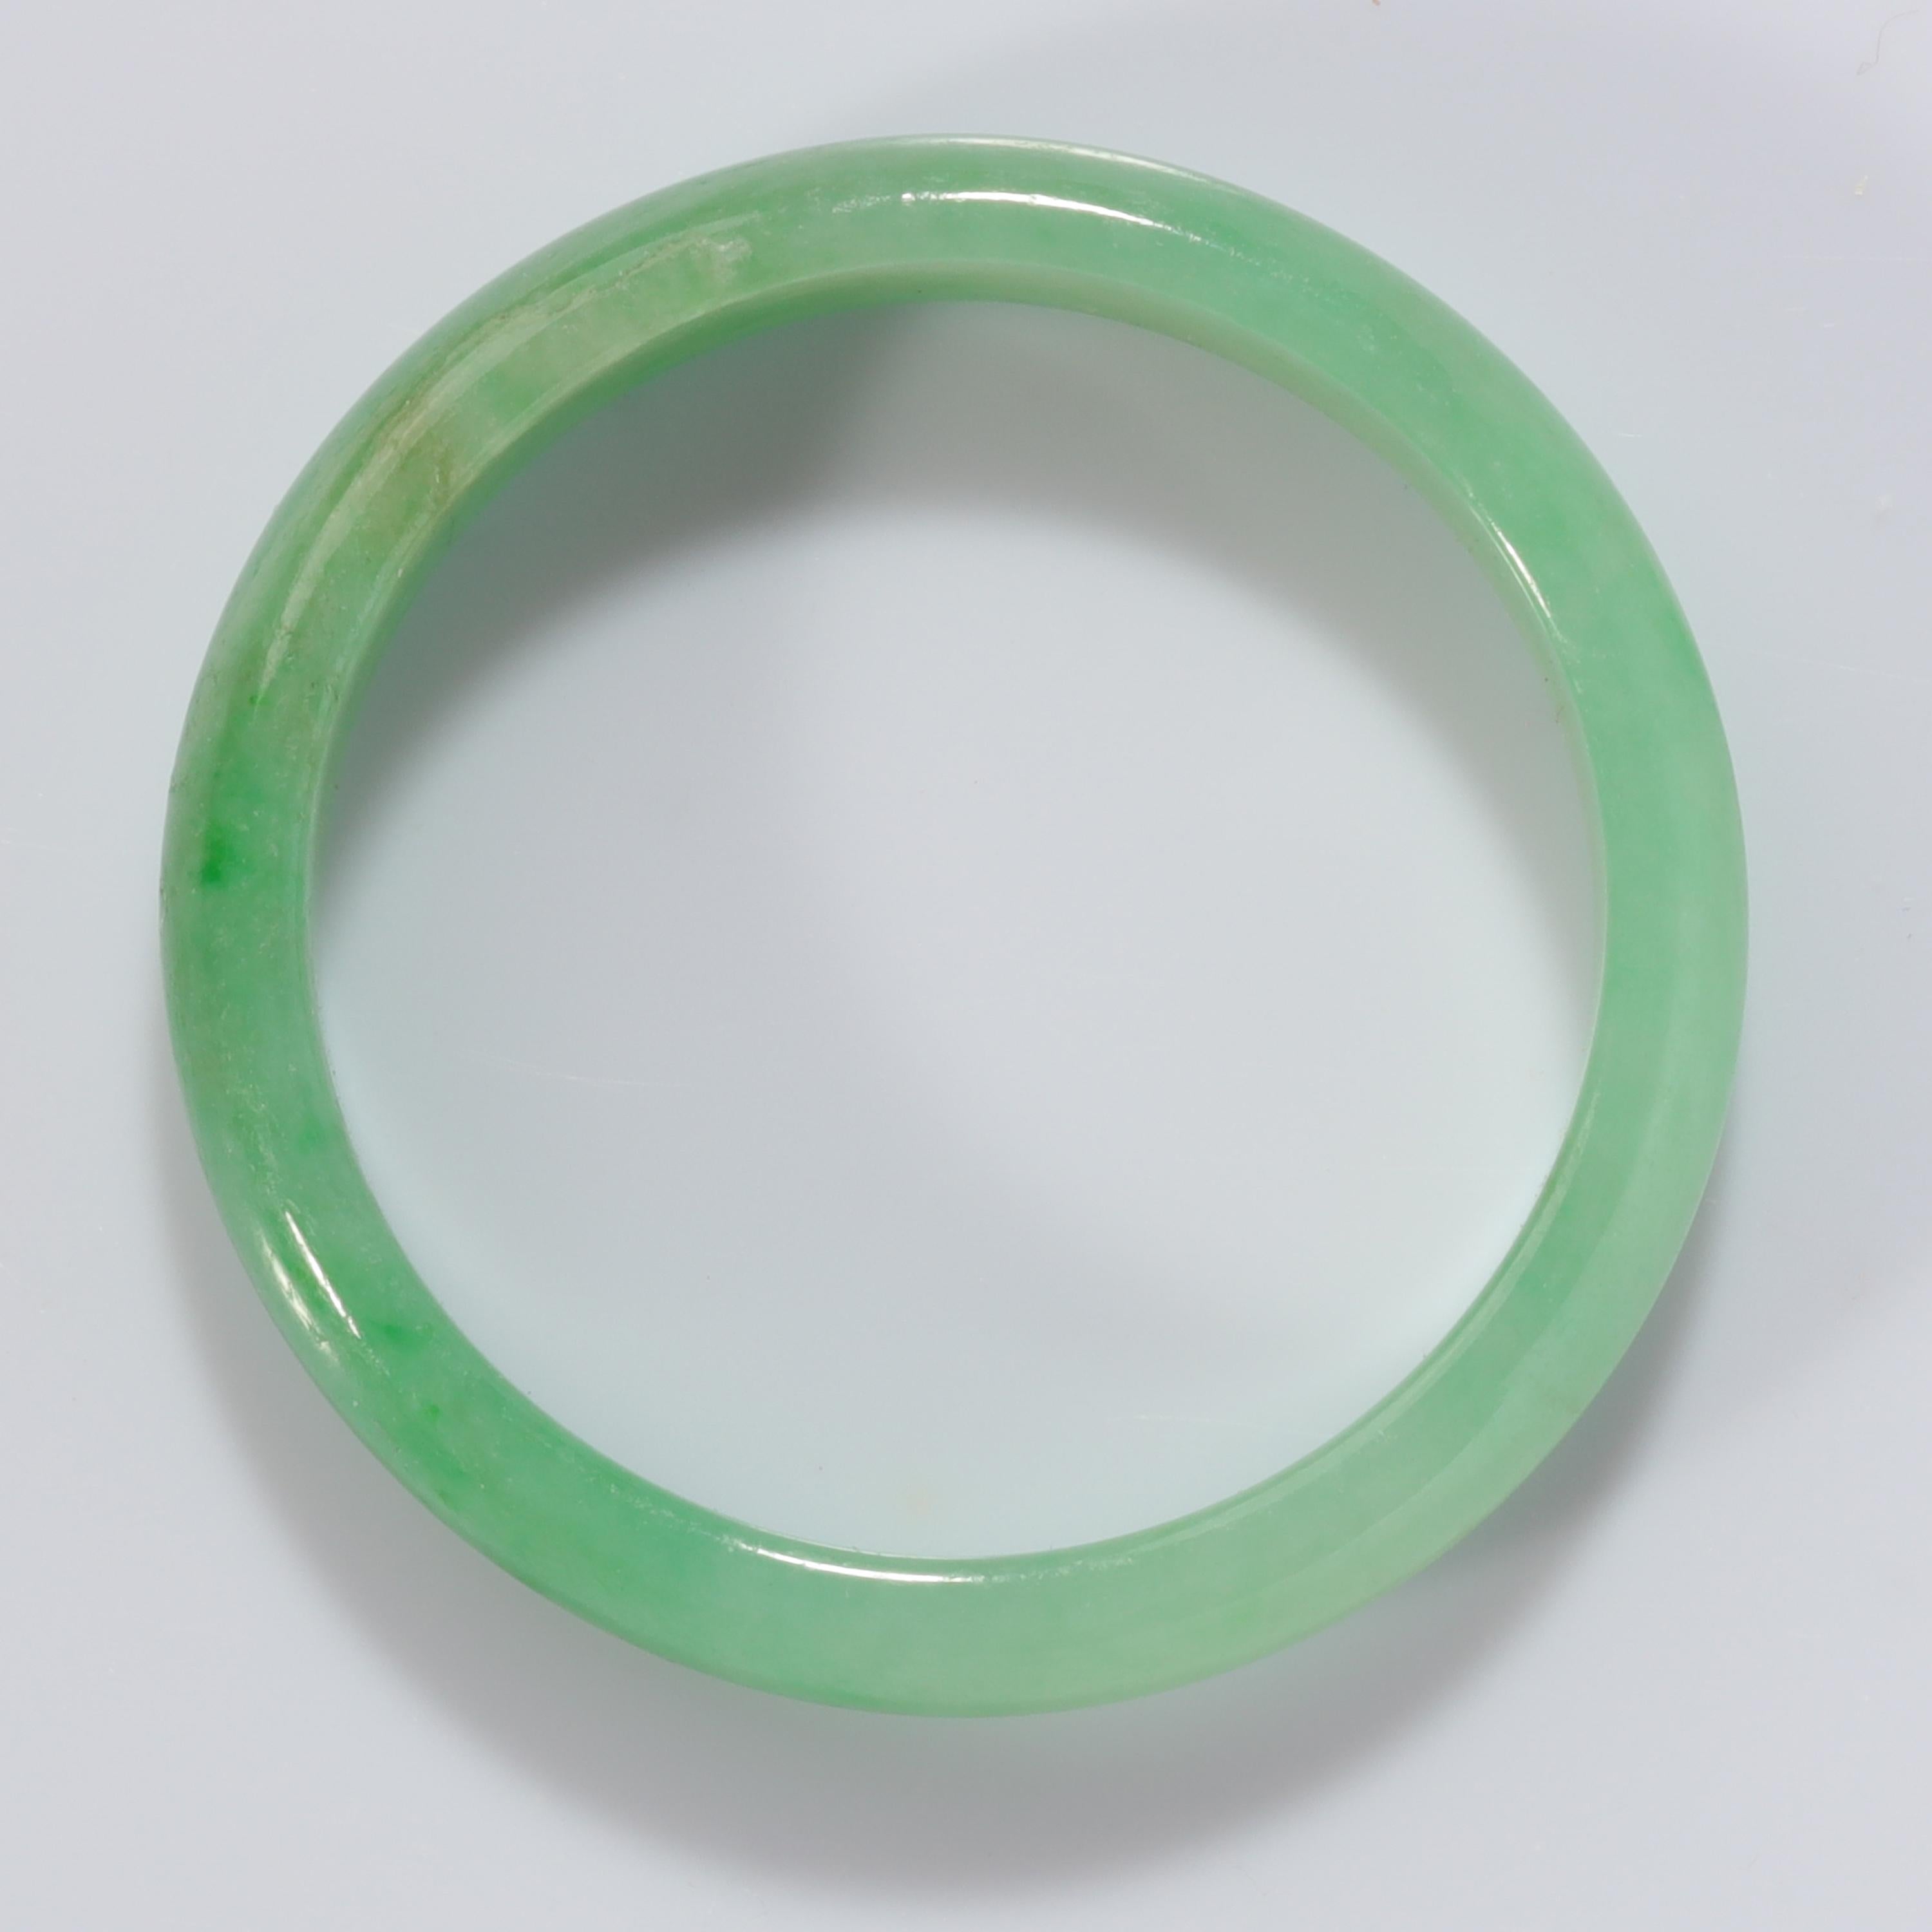 jade wedding ring